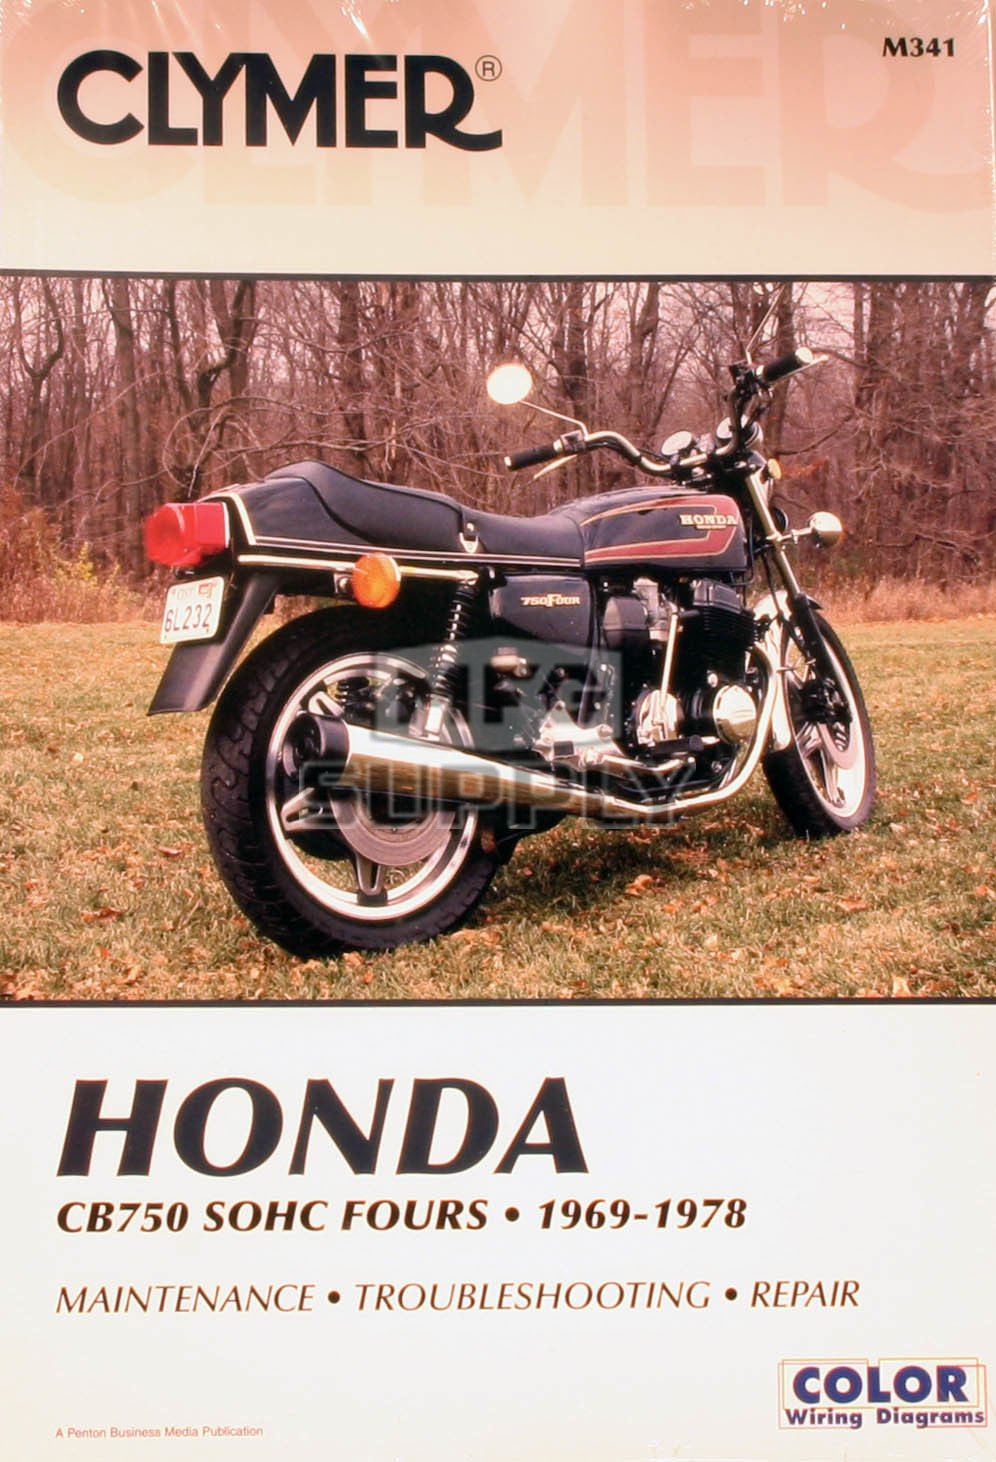 1969-1978 Honda CB750 SOHC Fours Clymer Service Repair Maintenance Manual M341